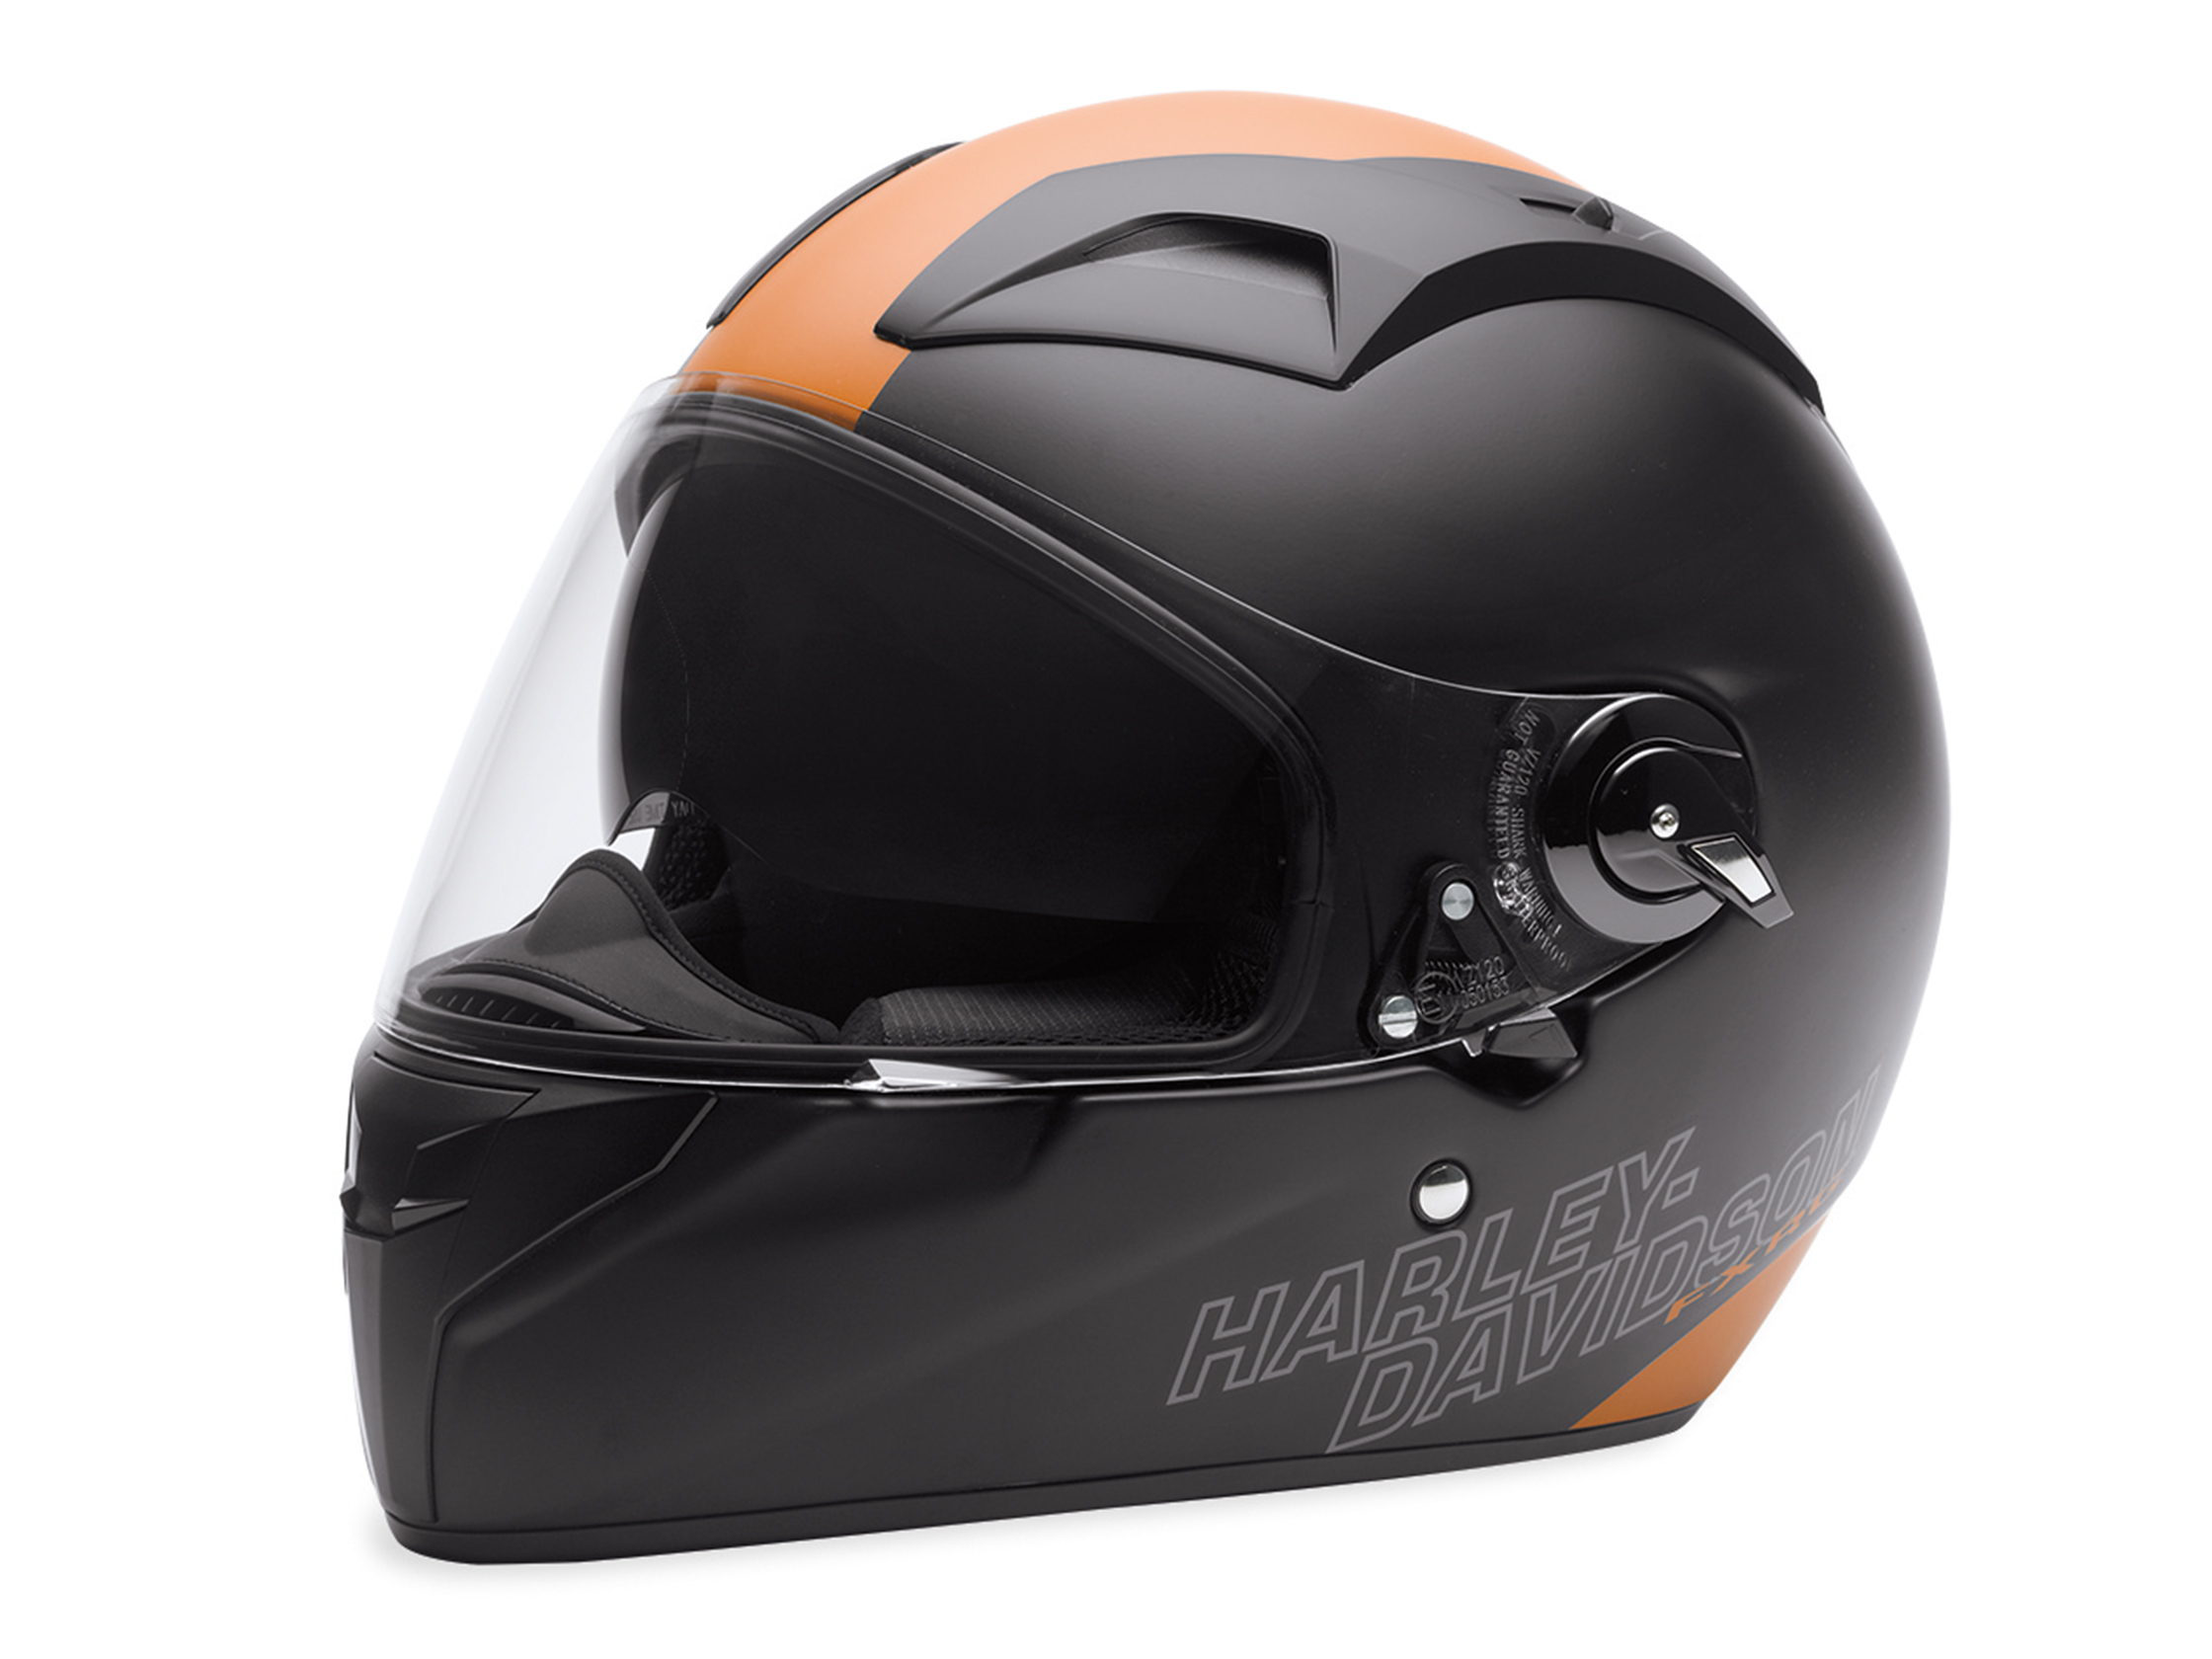 Bagster Motorradhelm Bagster Helmtasche/-rucksack Schwarz-Camo-Neon